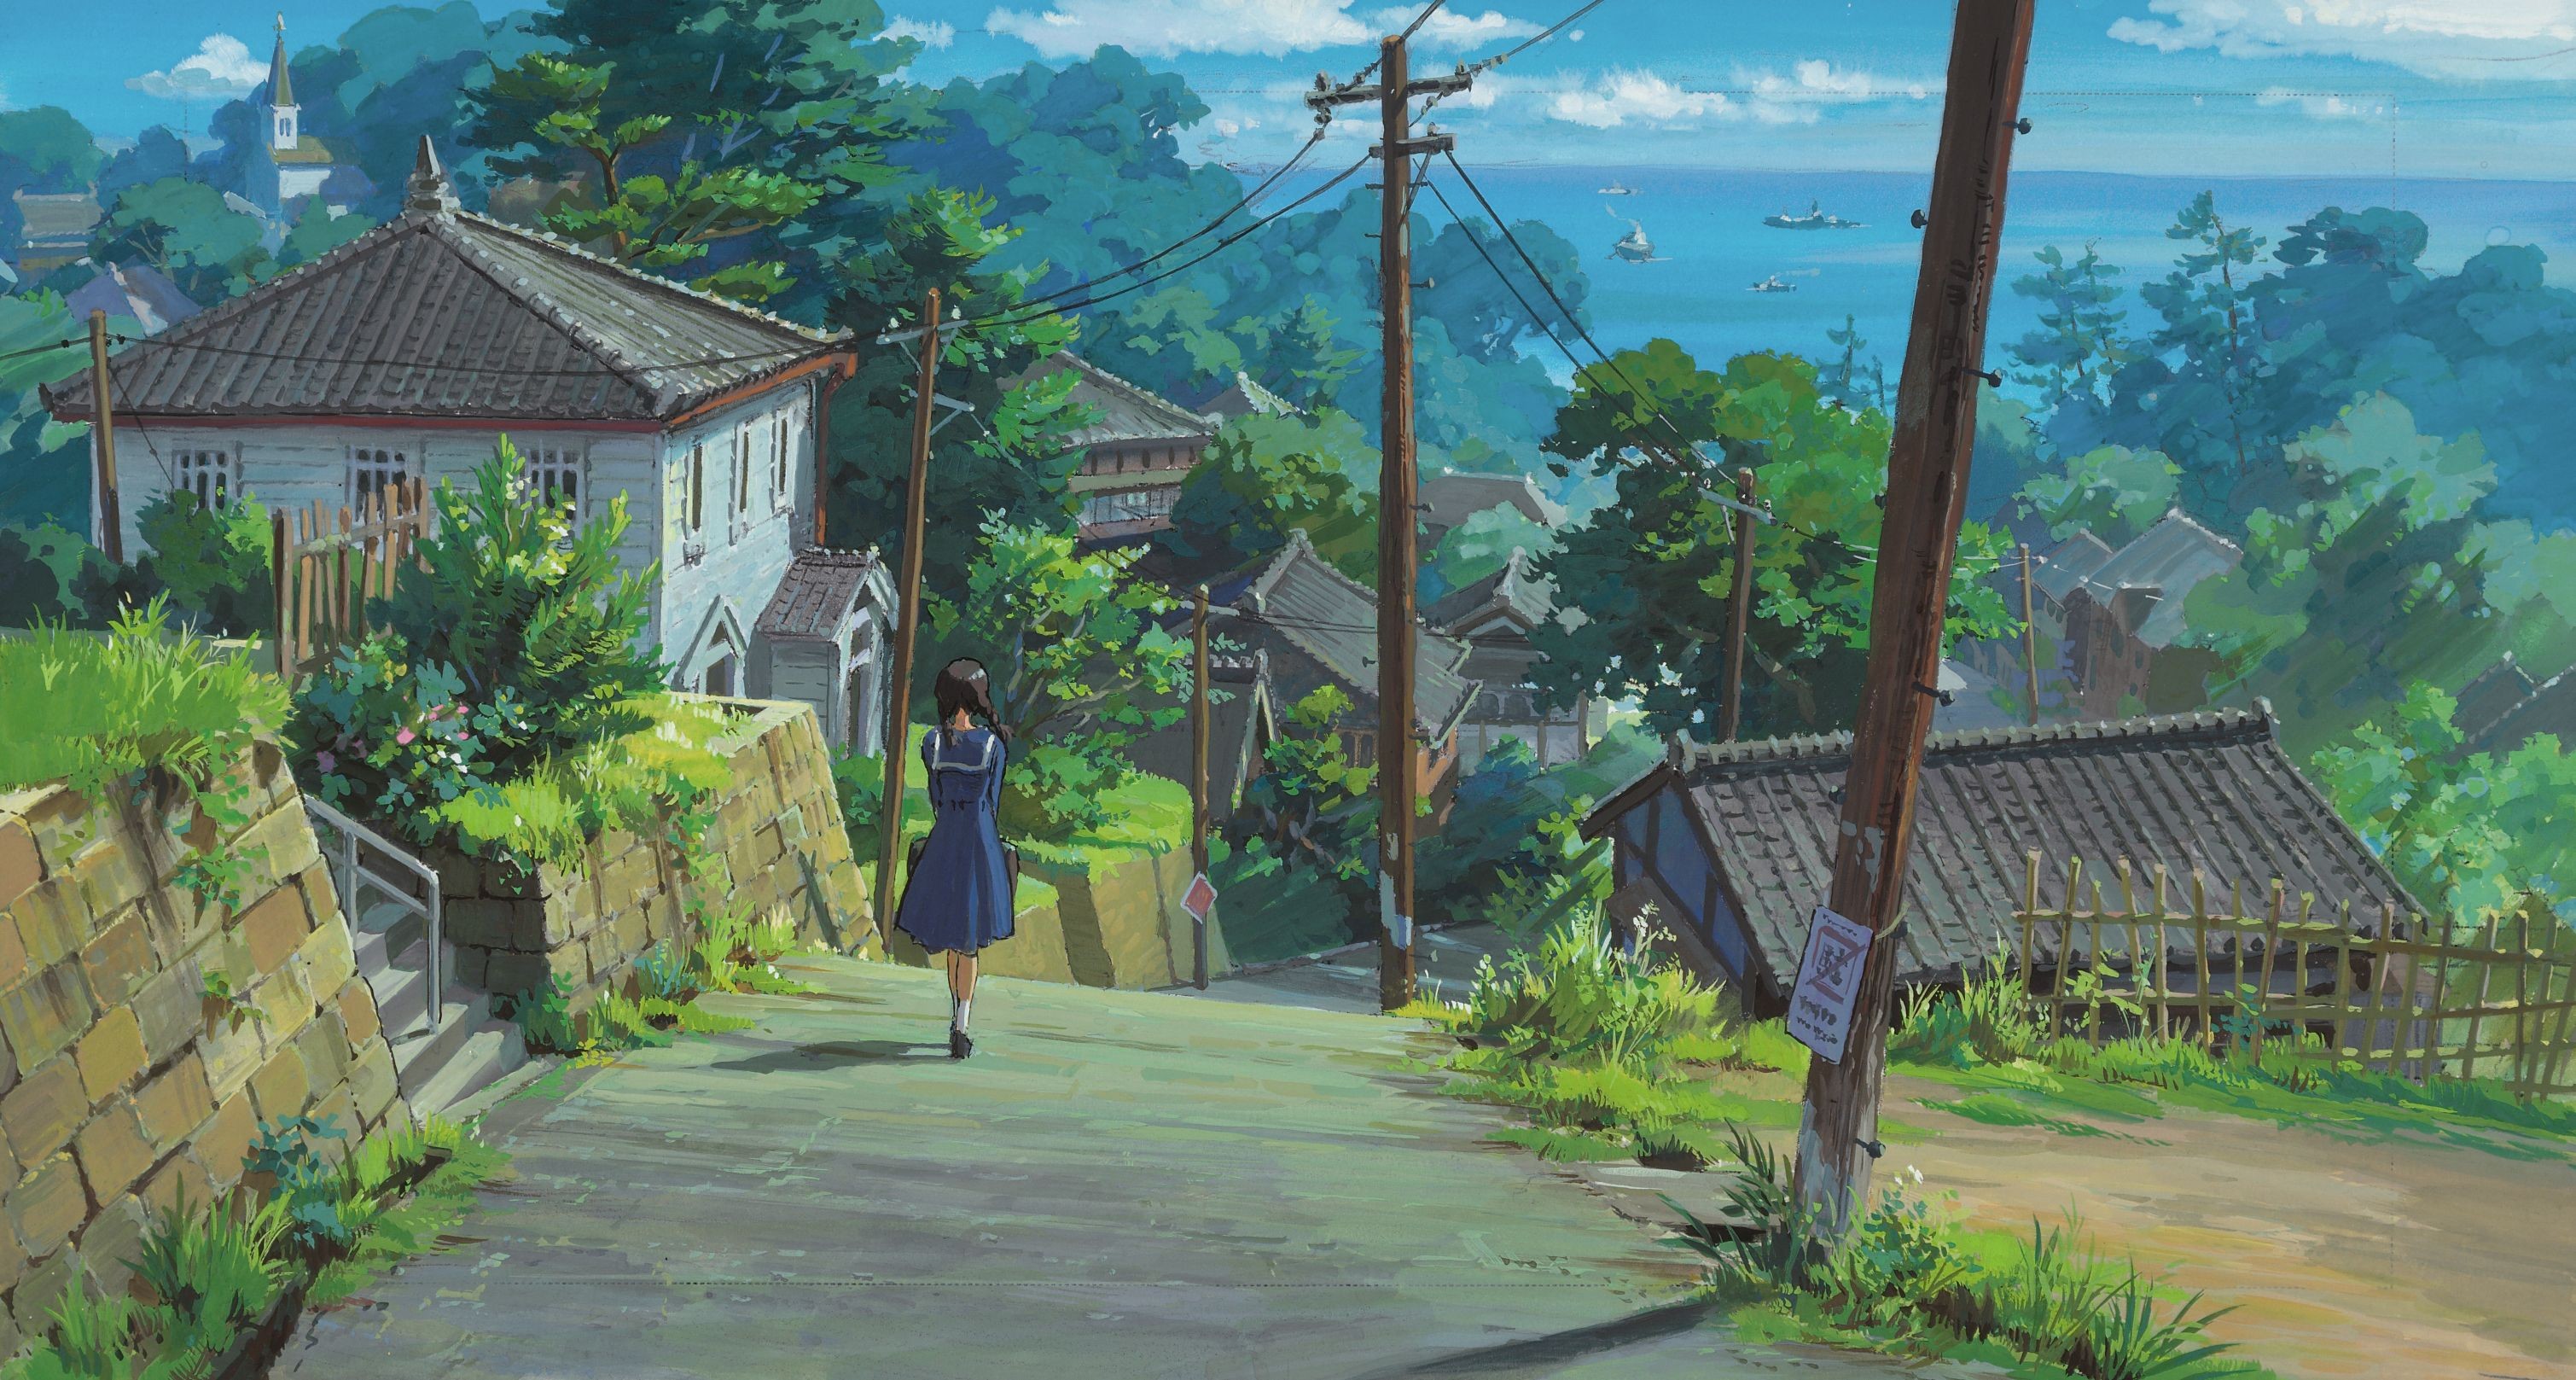 3019x1617 Miyazaki's anime cartoon, girl walking along the road